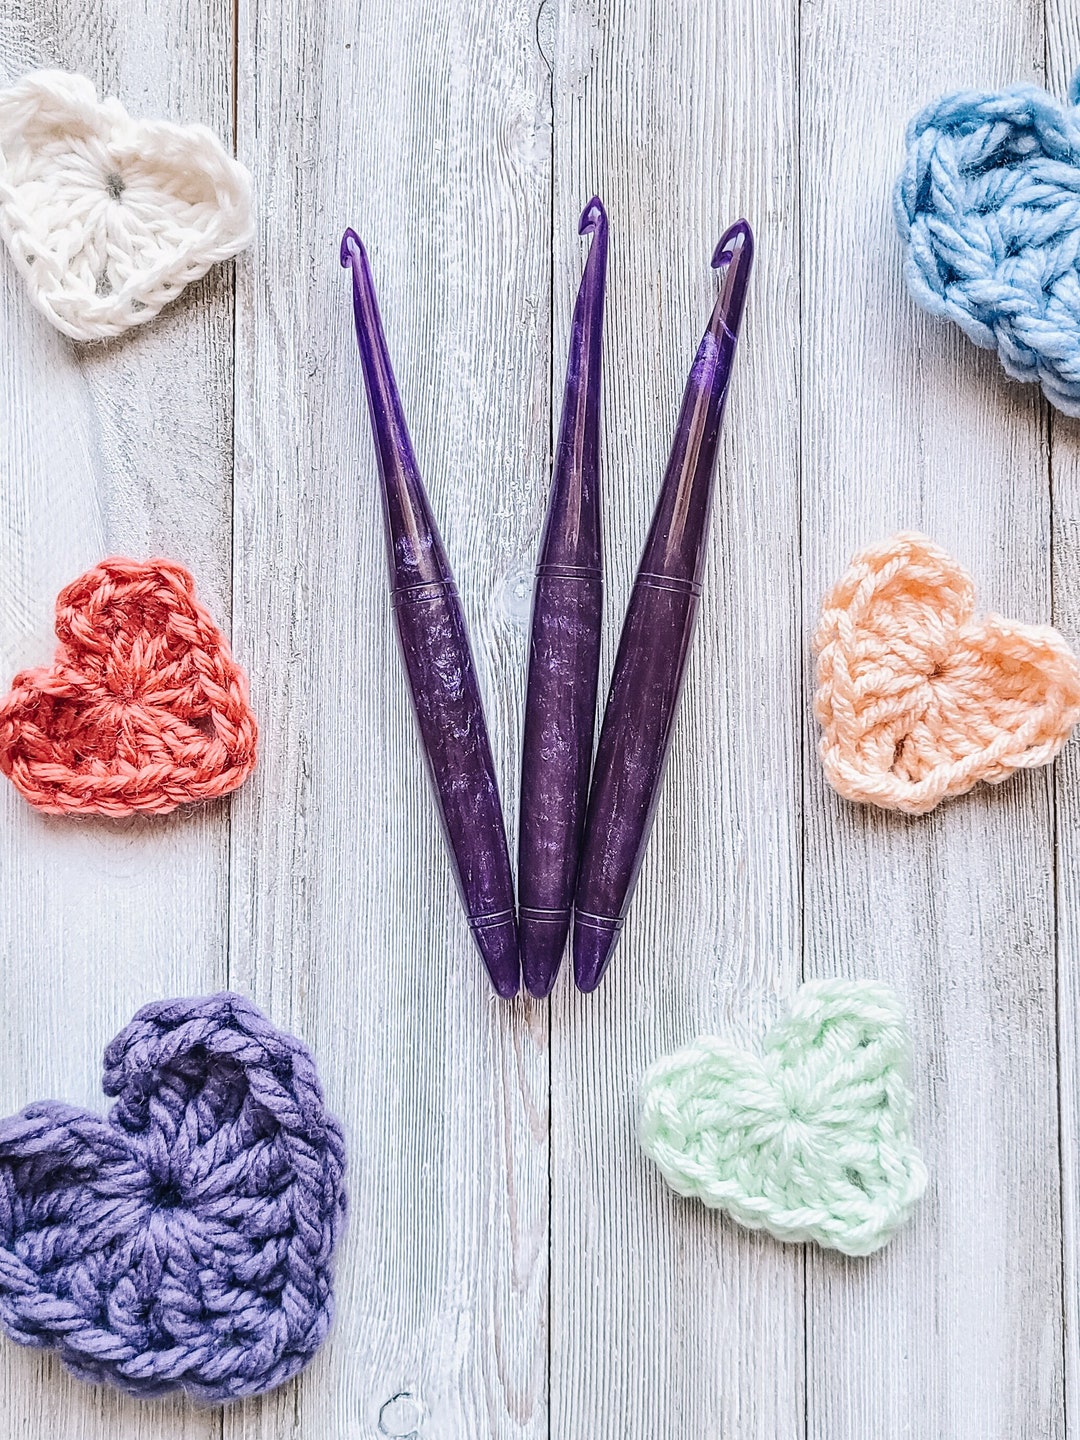 Curved Crochet Hook Set Includes 8 Hook Sizes, Ergonomic Crochet